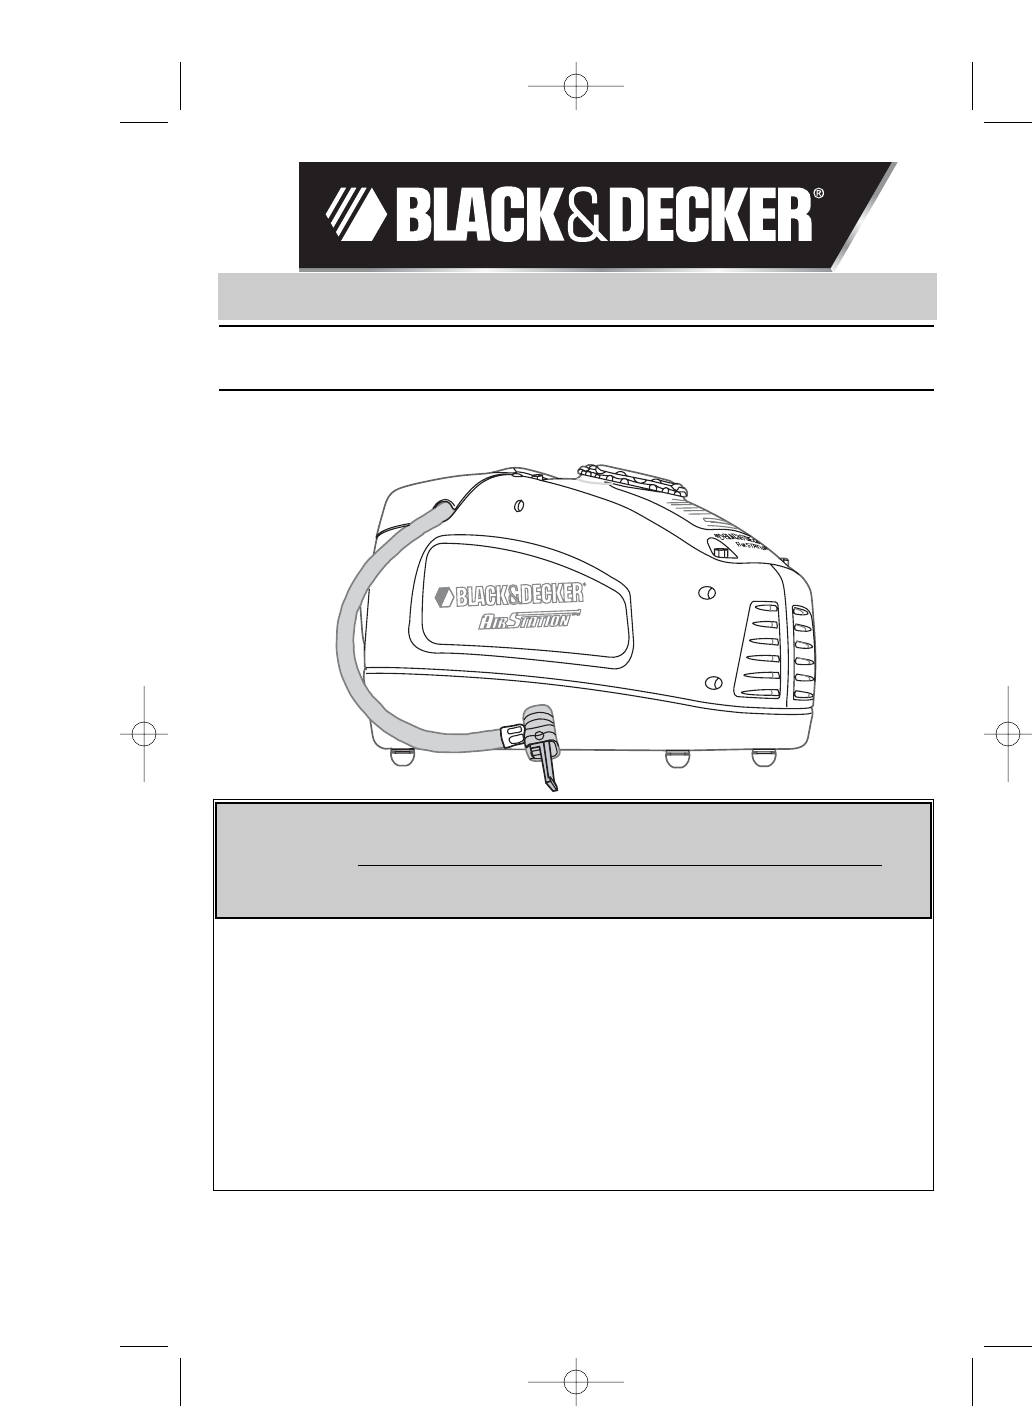 BLACK & DECKER ASI300 ORIGINAL INSTRUCTIONS MANUAL Pdf Download